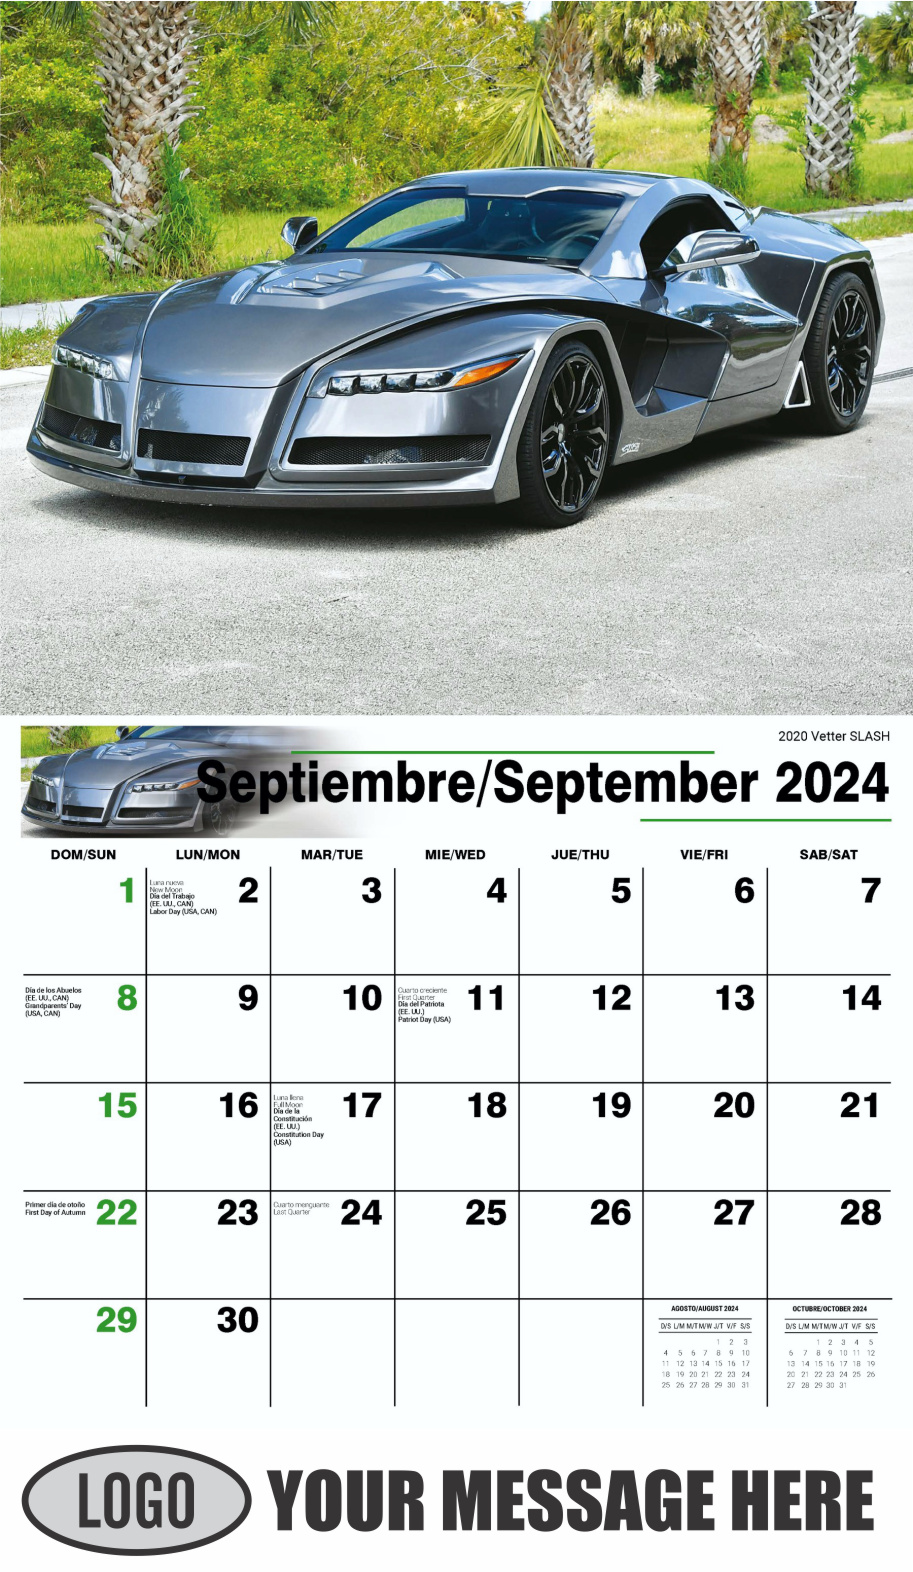 Exotic Cars 2024 Bilingual Automotive Business Promotional Calendar - September